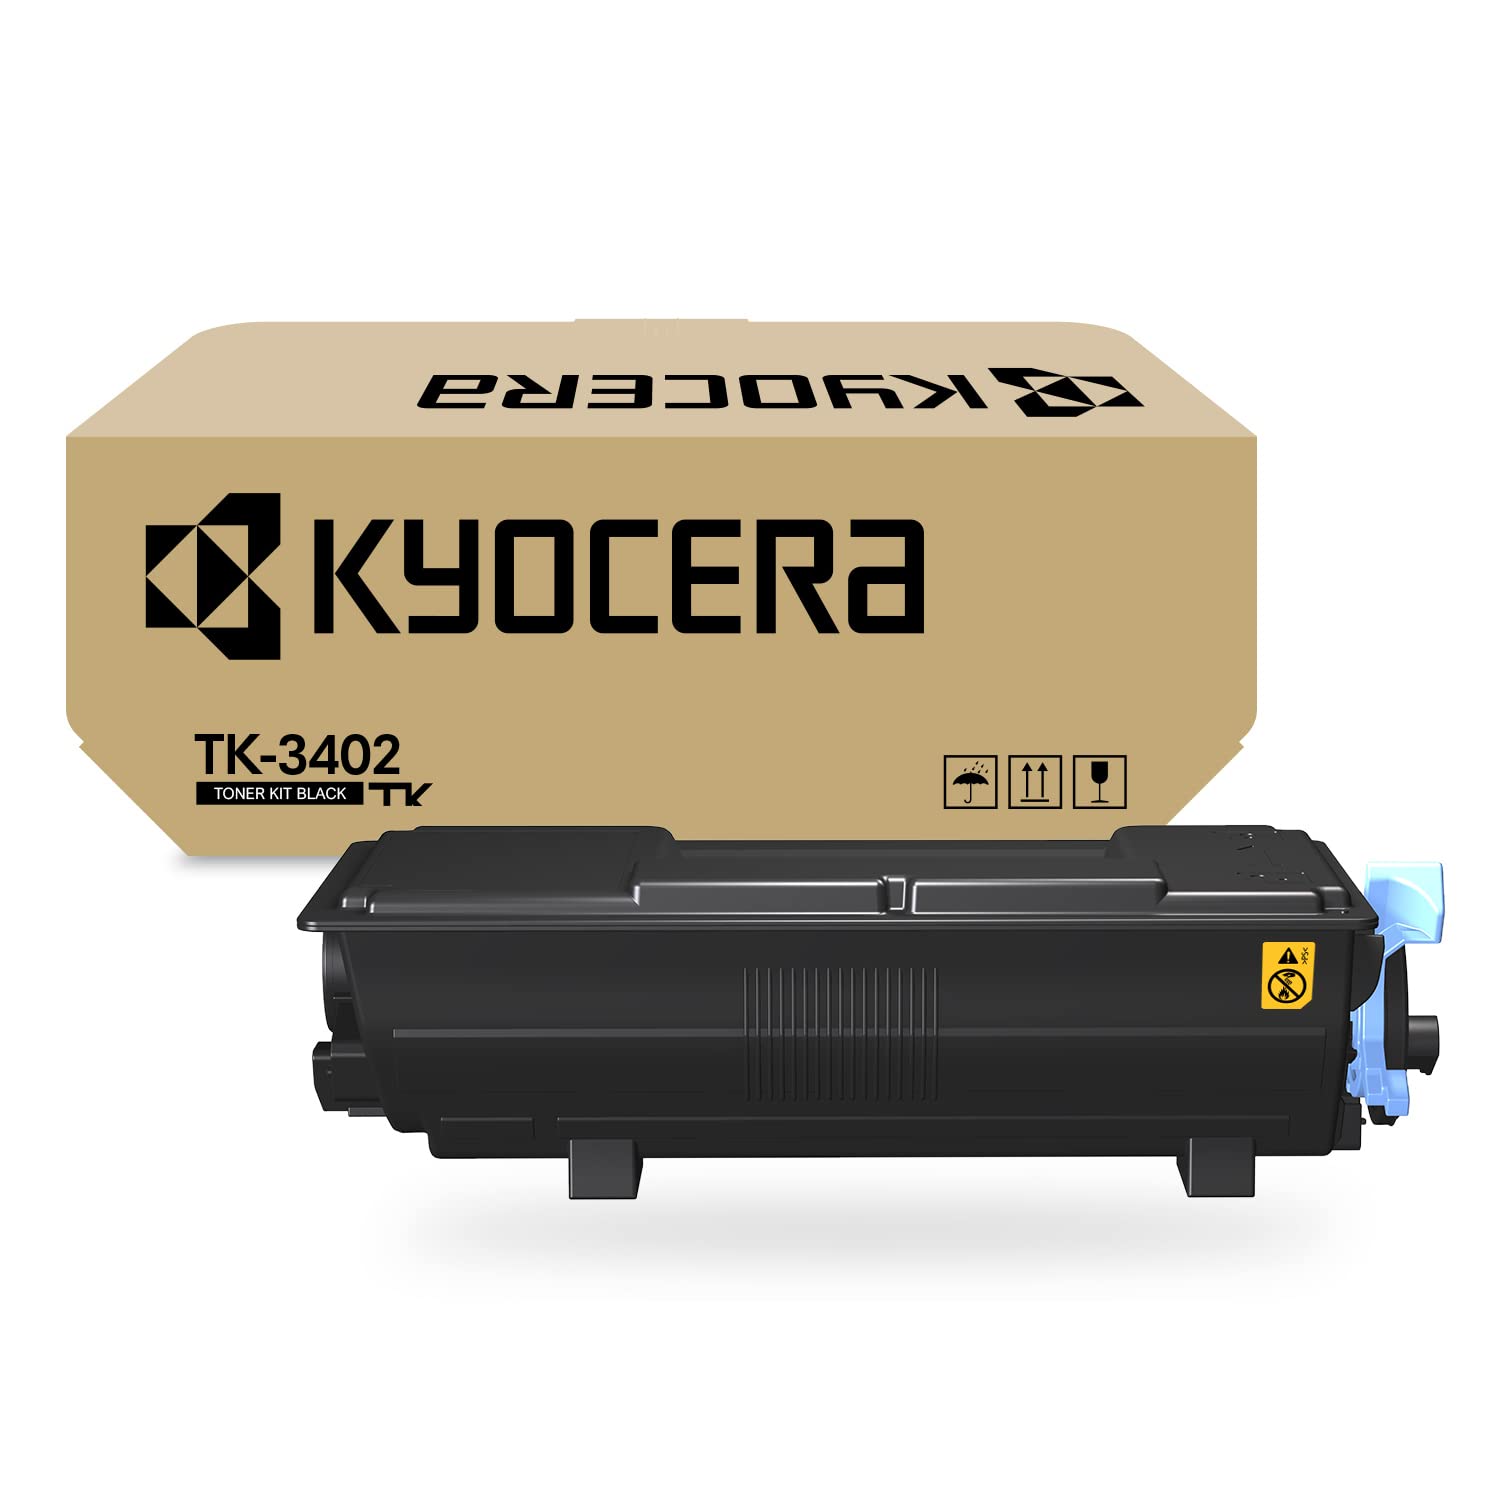 Kyocera Genuine TK-3402 Black Toner Cartridge for ECOSYS PA4500x / MA4500ix / MA4500ifx Model Laser Printers (1T0C0Y0US0)